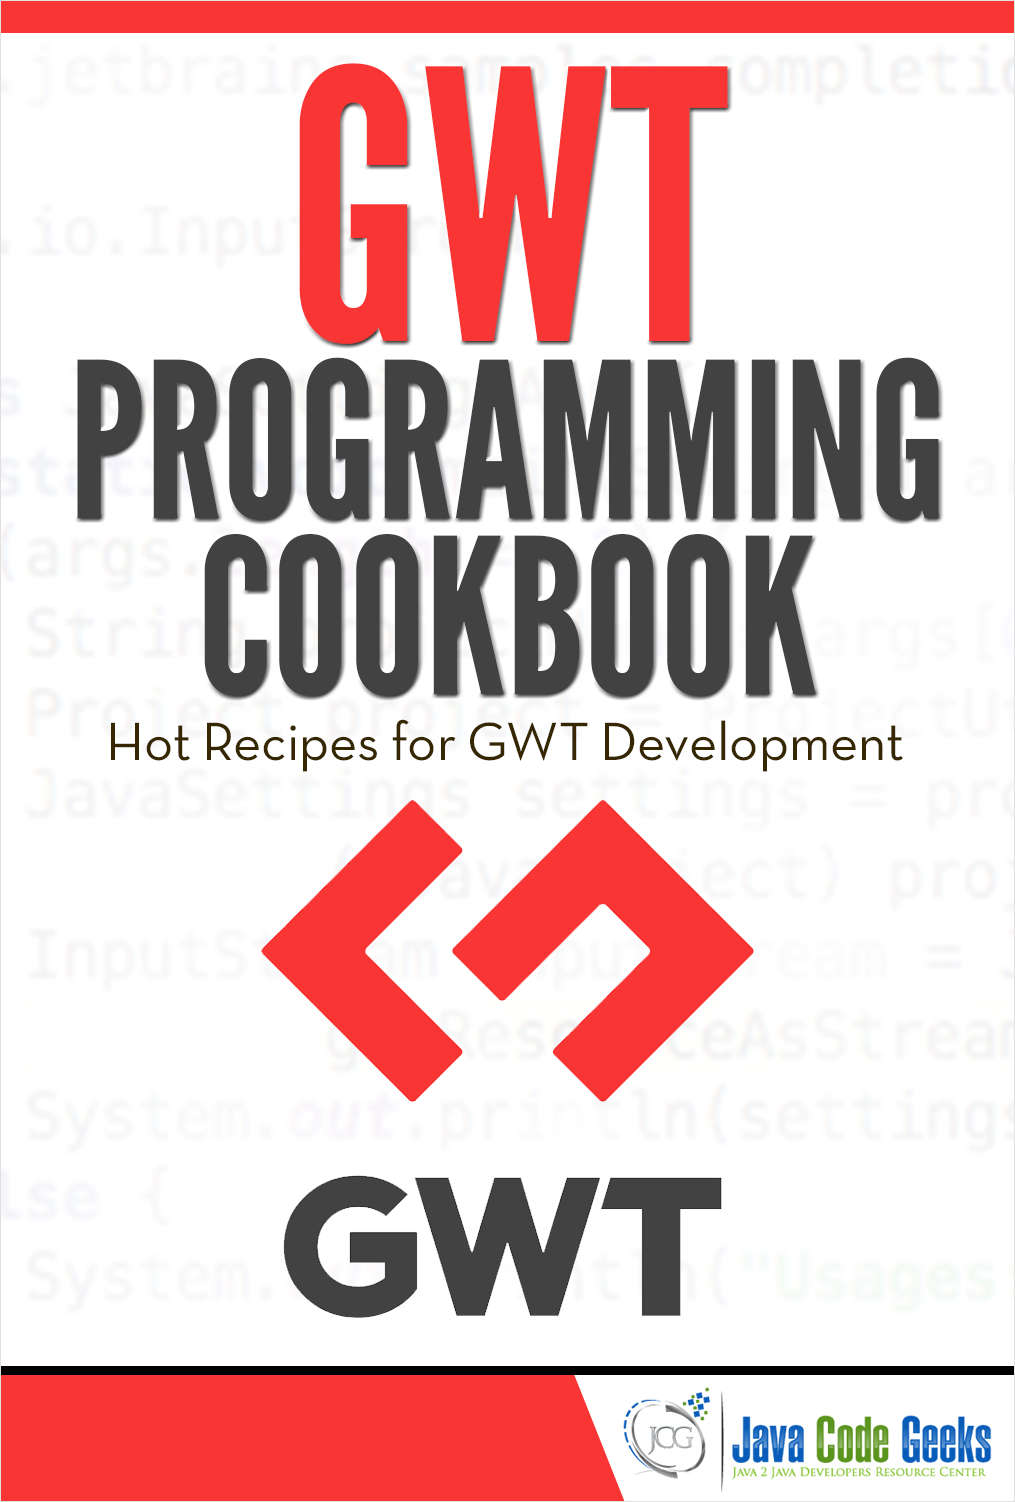 GWT Programming Cookbook